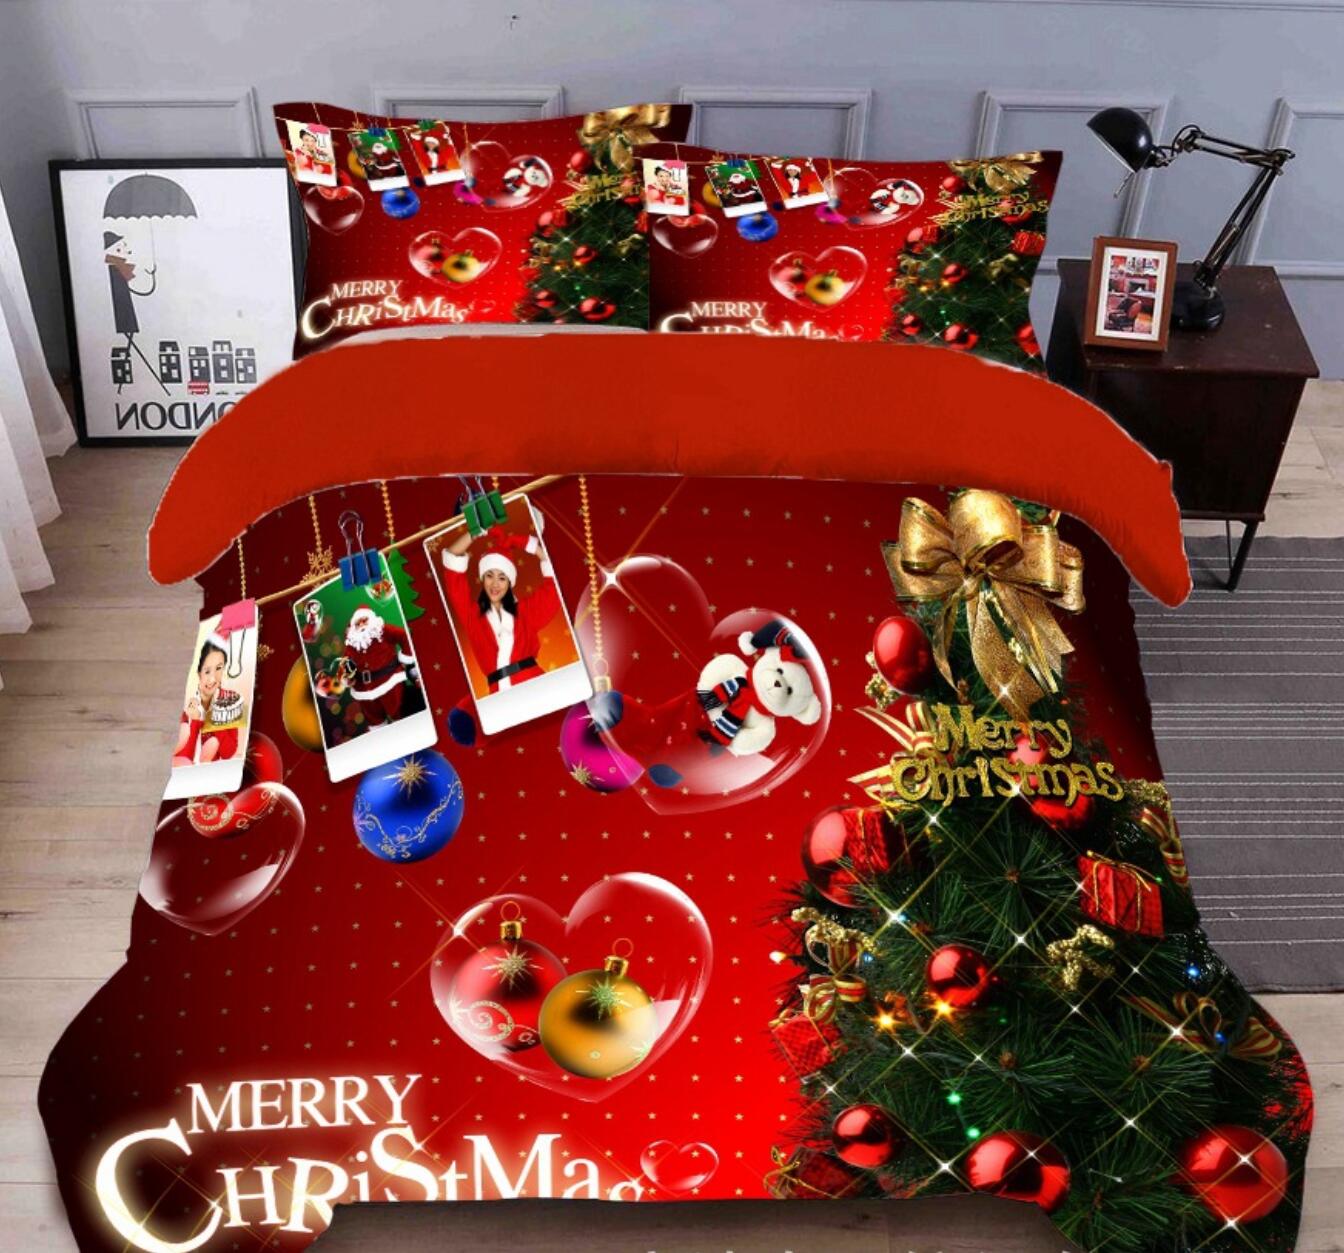 3D Christmas Tree Photo Folder 31226 Christmas Quilt Duvet Cover Xmas Bed Pillowcases